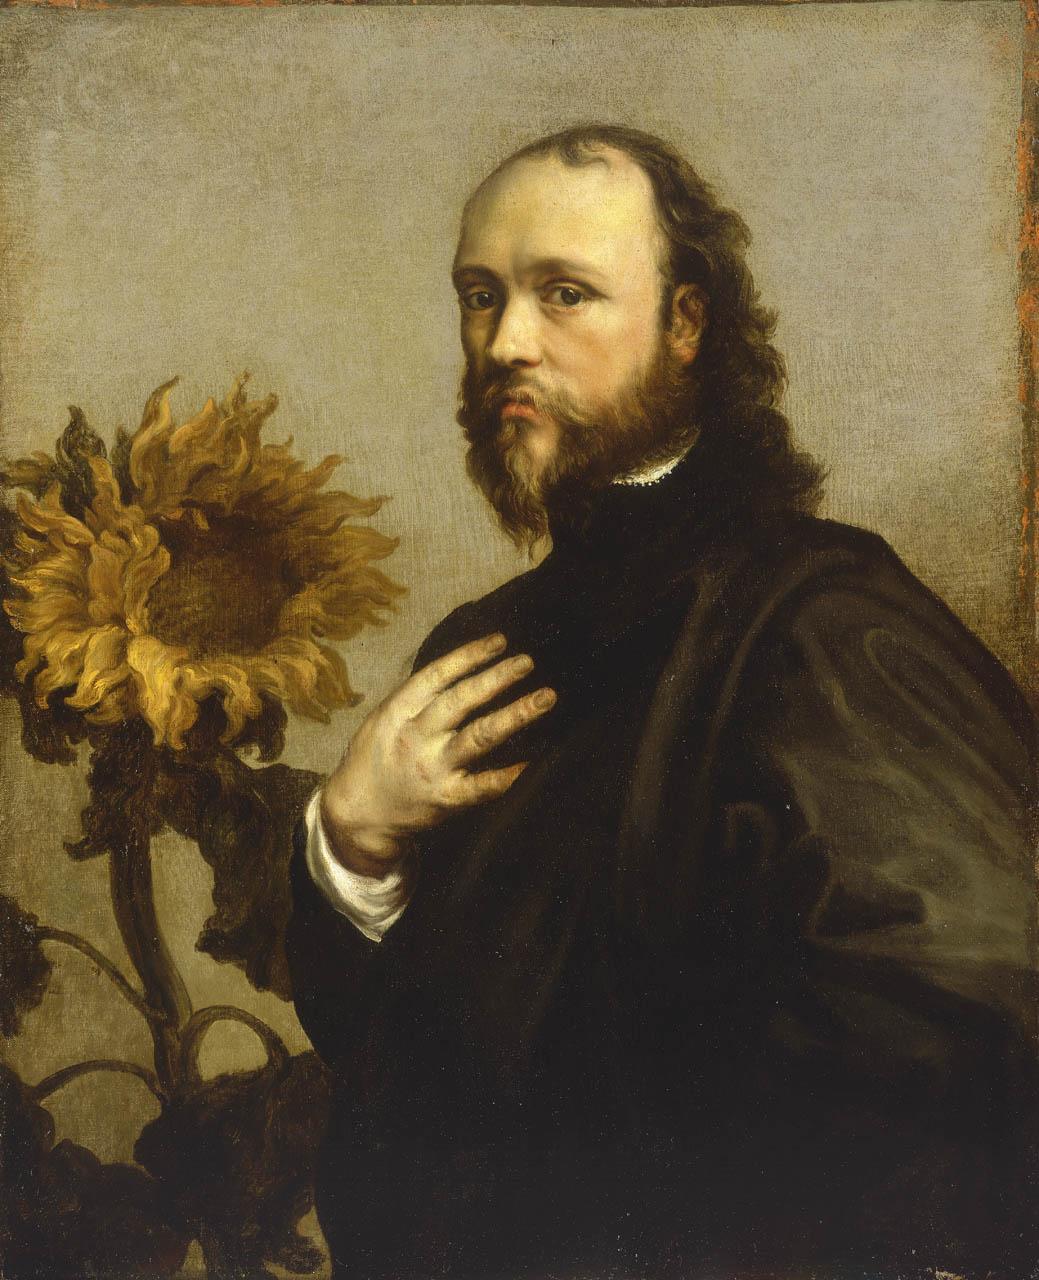 Van Dyke Sir Kenelm Digby with Sunflower